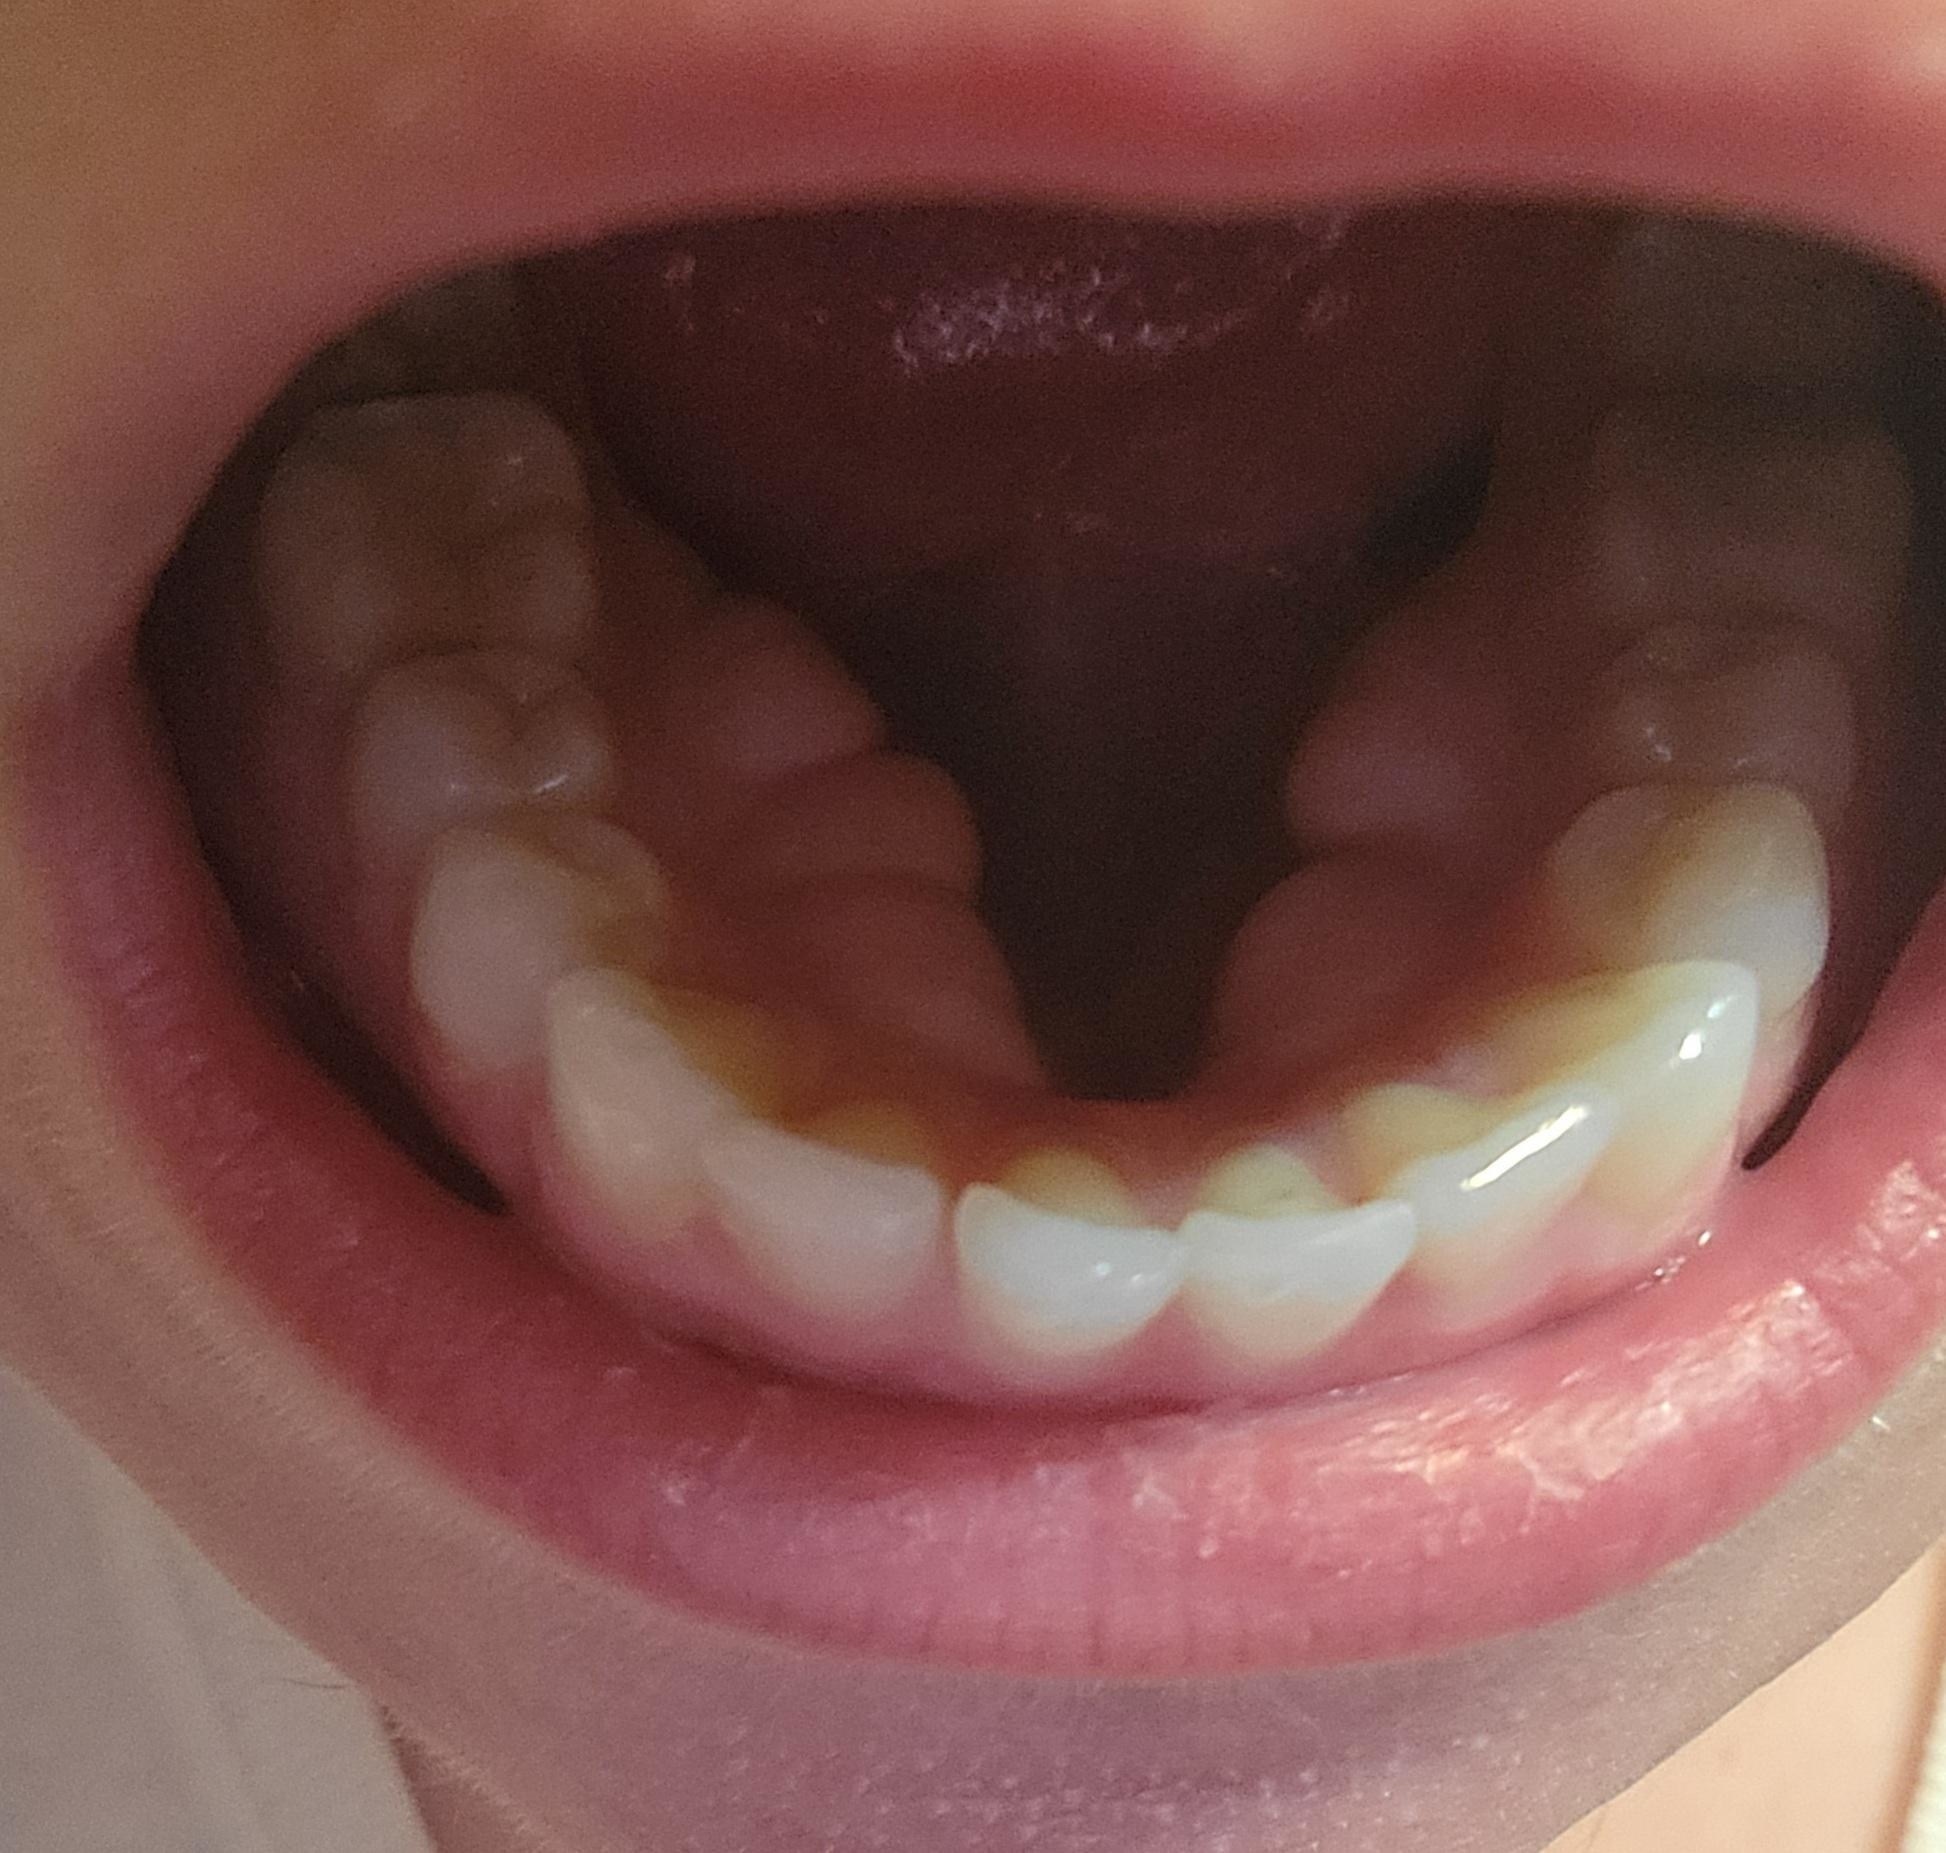 A mouth with Mandibular tori